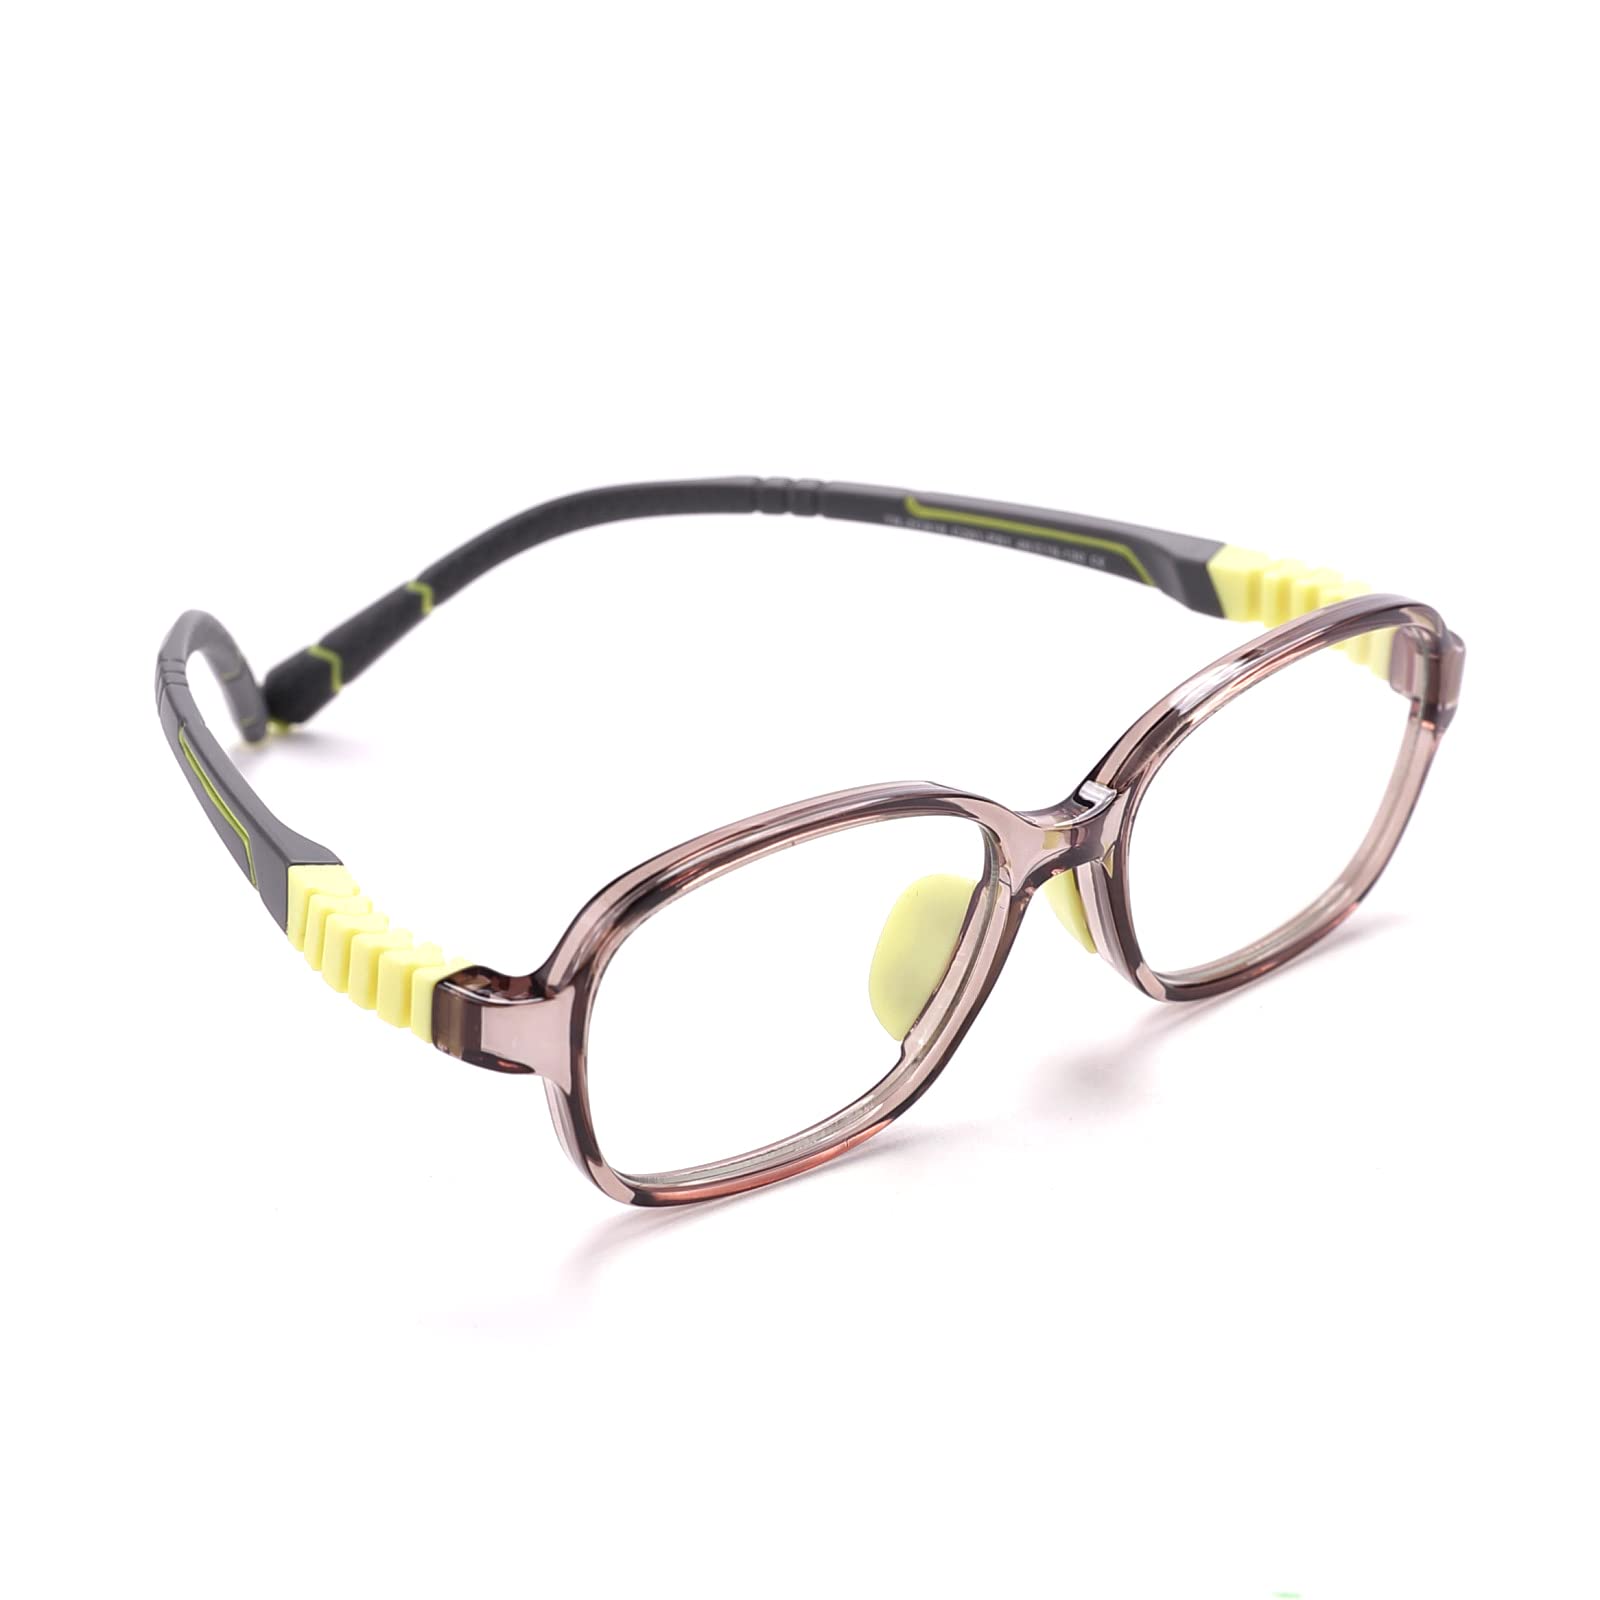 Intellilens Squarish Oval Kids Computer Glasses for Eye Protection | Zero Power, Anti Glare & Blue Light Filter Glasses | Blue Cut Lenses for Boys and Girls (Grey) (46-15-130)